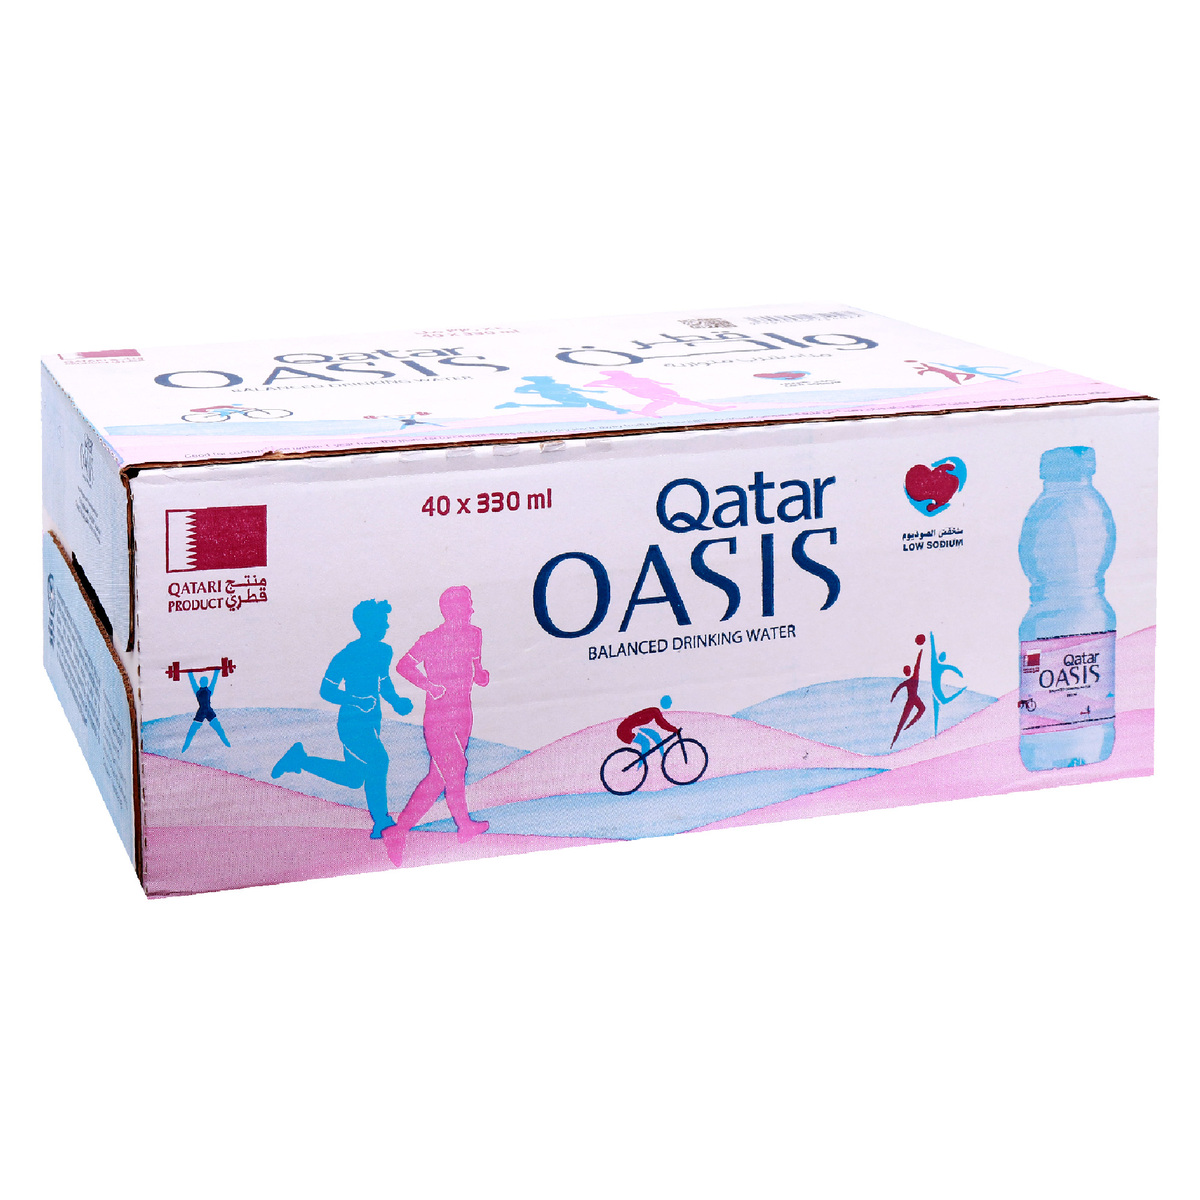 Qatar Oasis Balanced Drinking Water 30 x 330ml